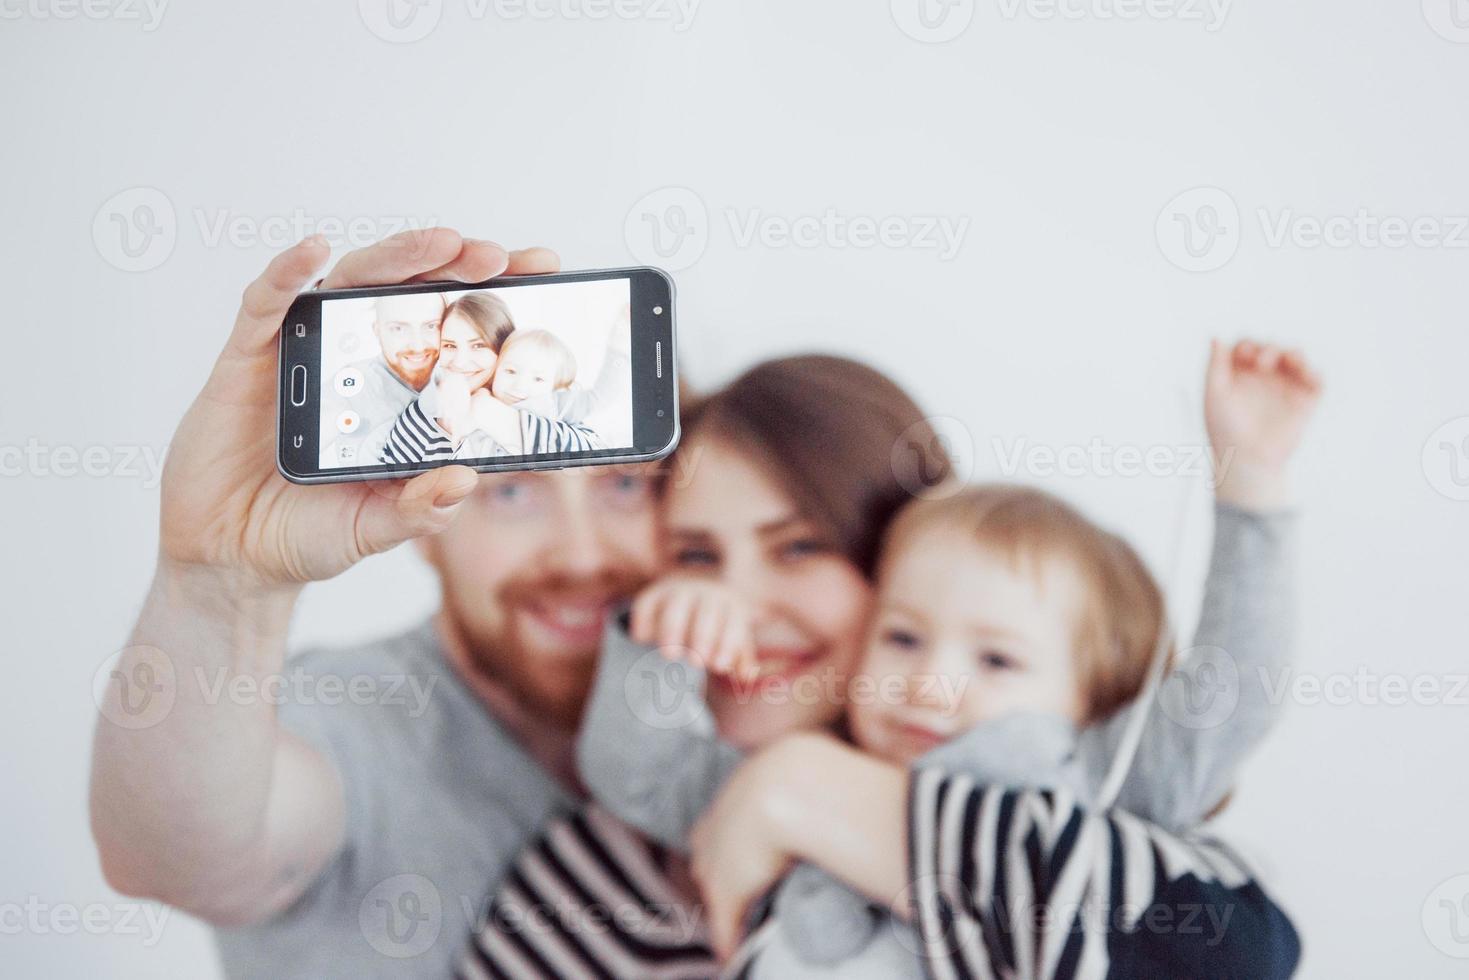 familie, vakantie, technologie en mensen - glimlachende moeder, vader en klein meisje maken selfie met camera op witte achtergrond foto